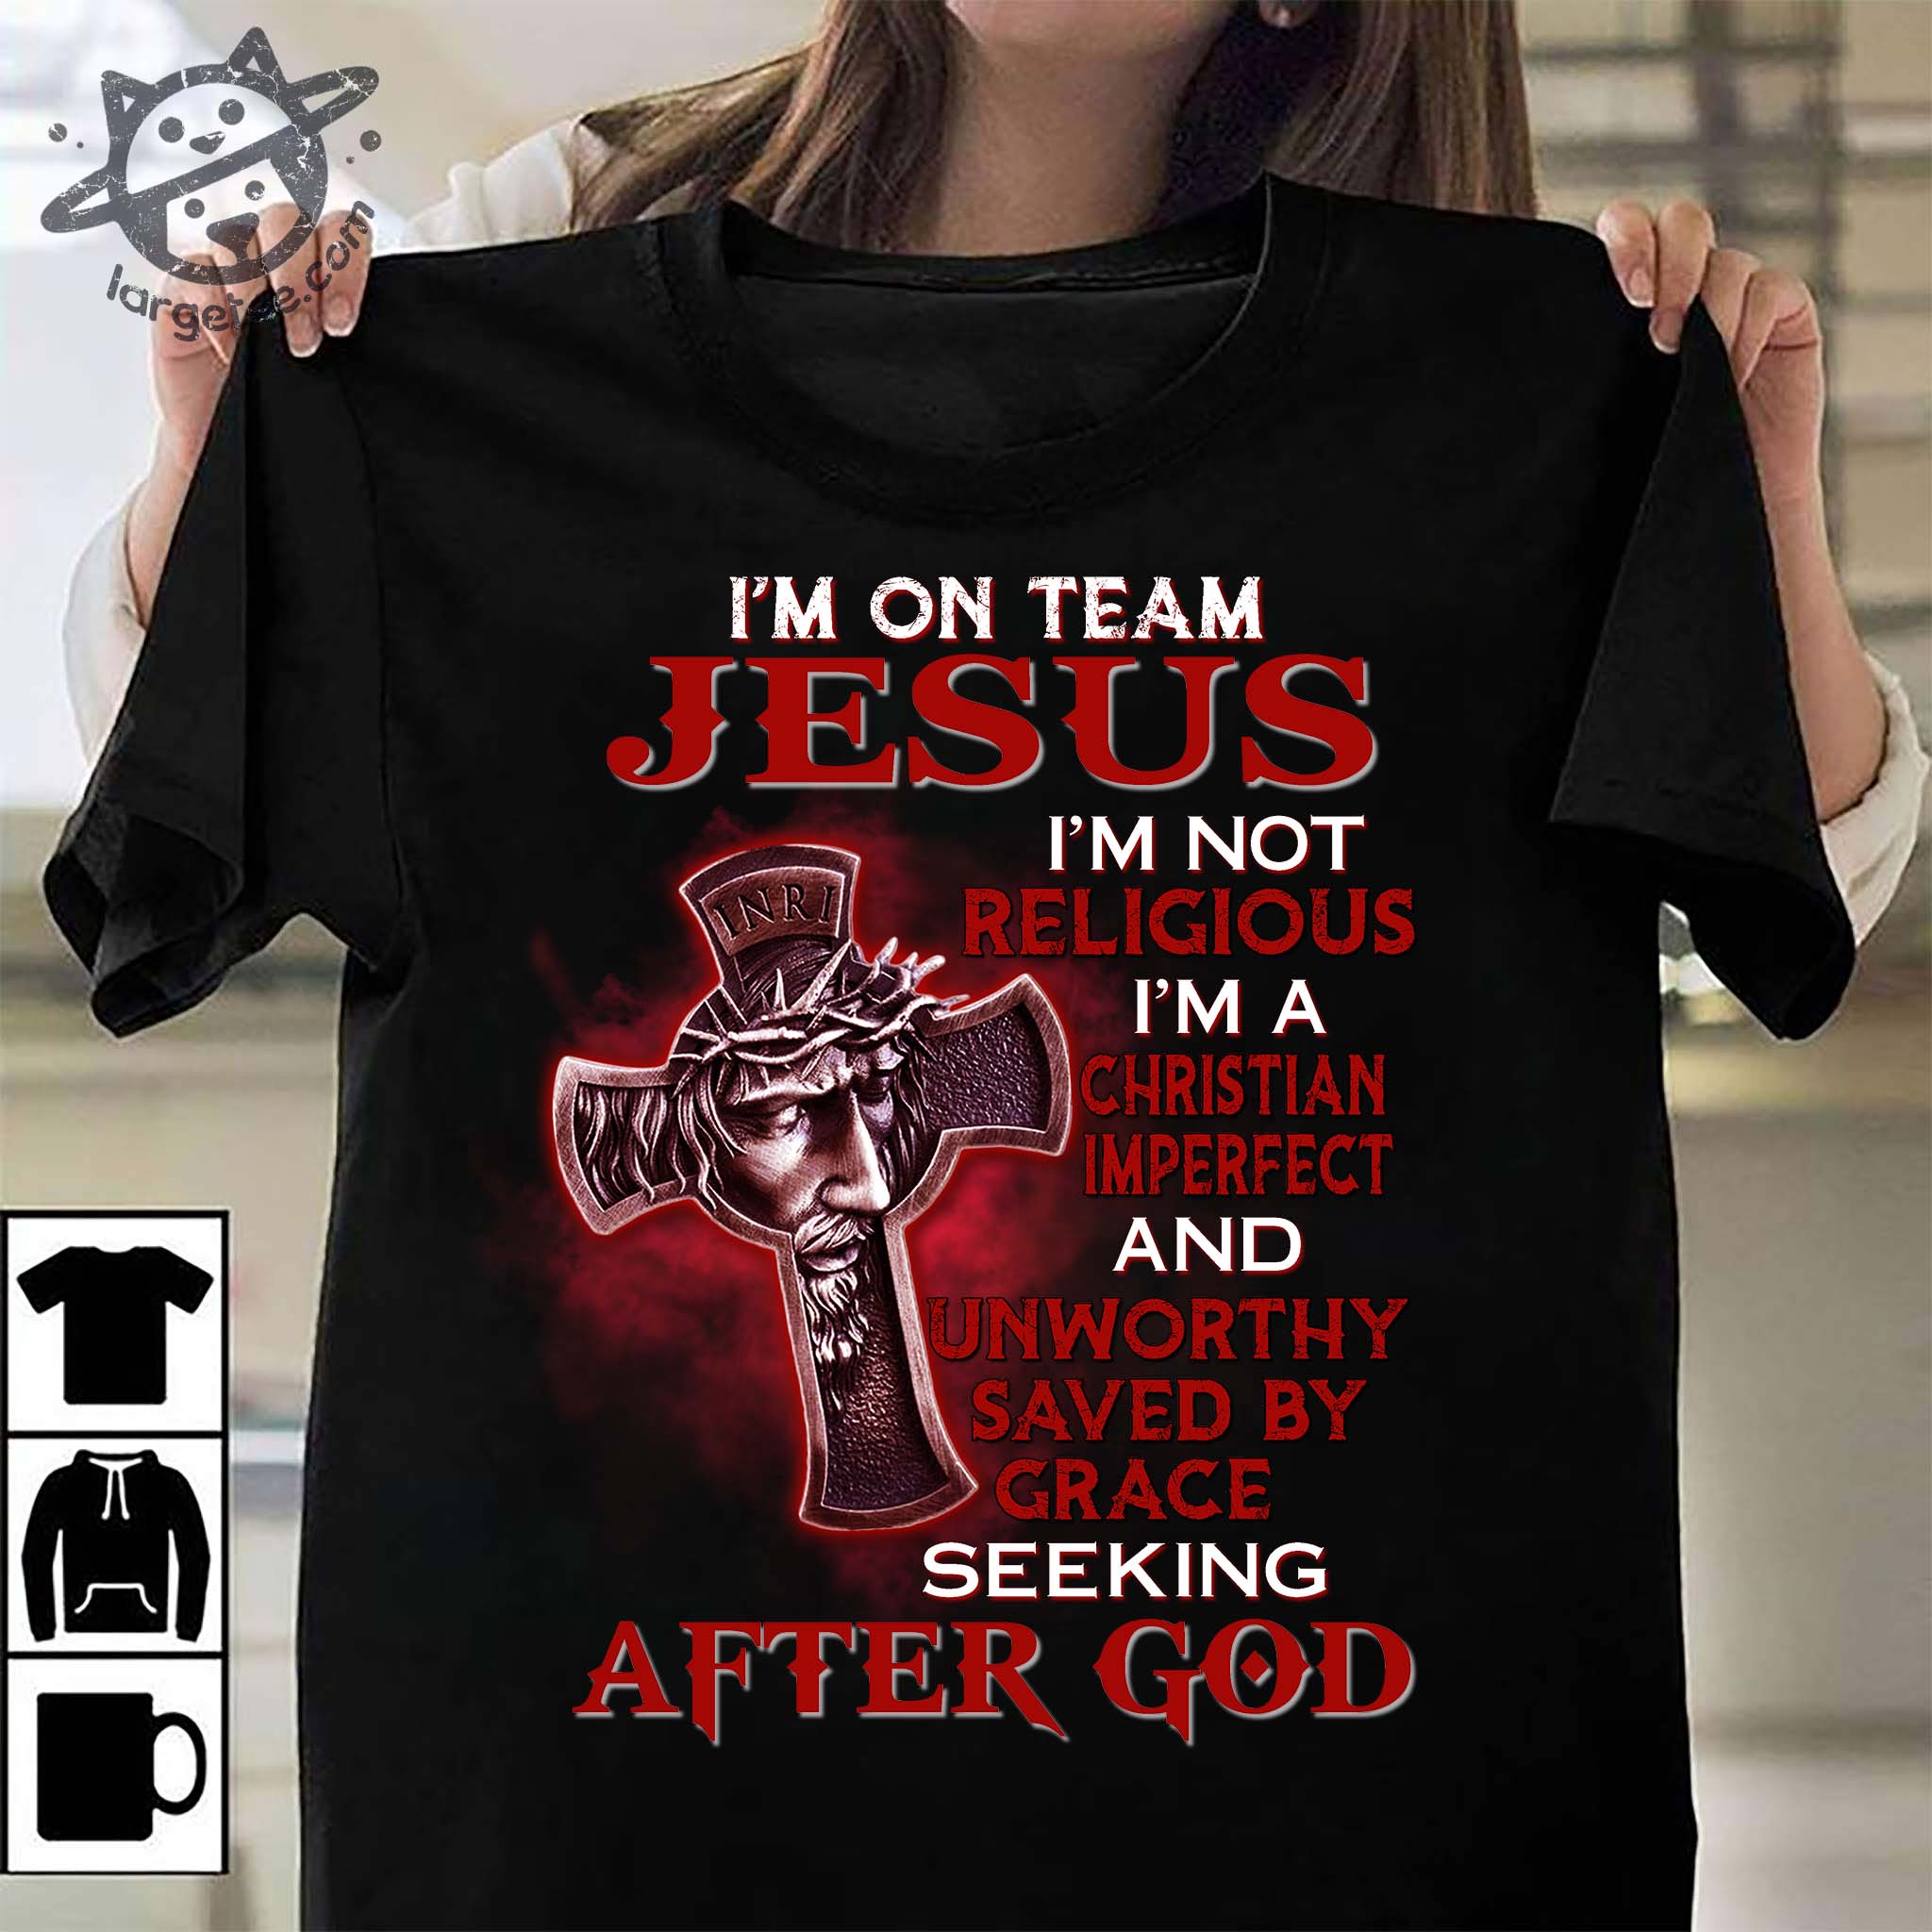 I'm on team Jesus I'm not religious I'm a Christian imperfect - God's cross